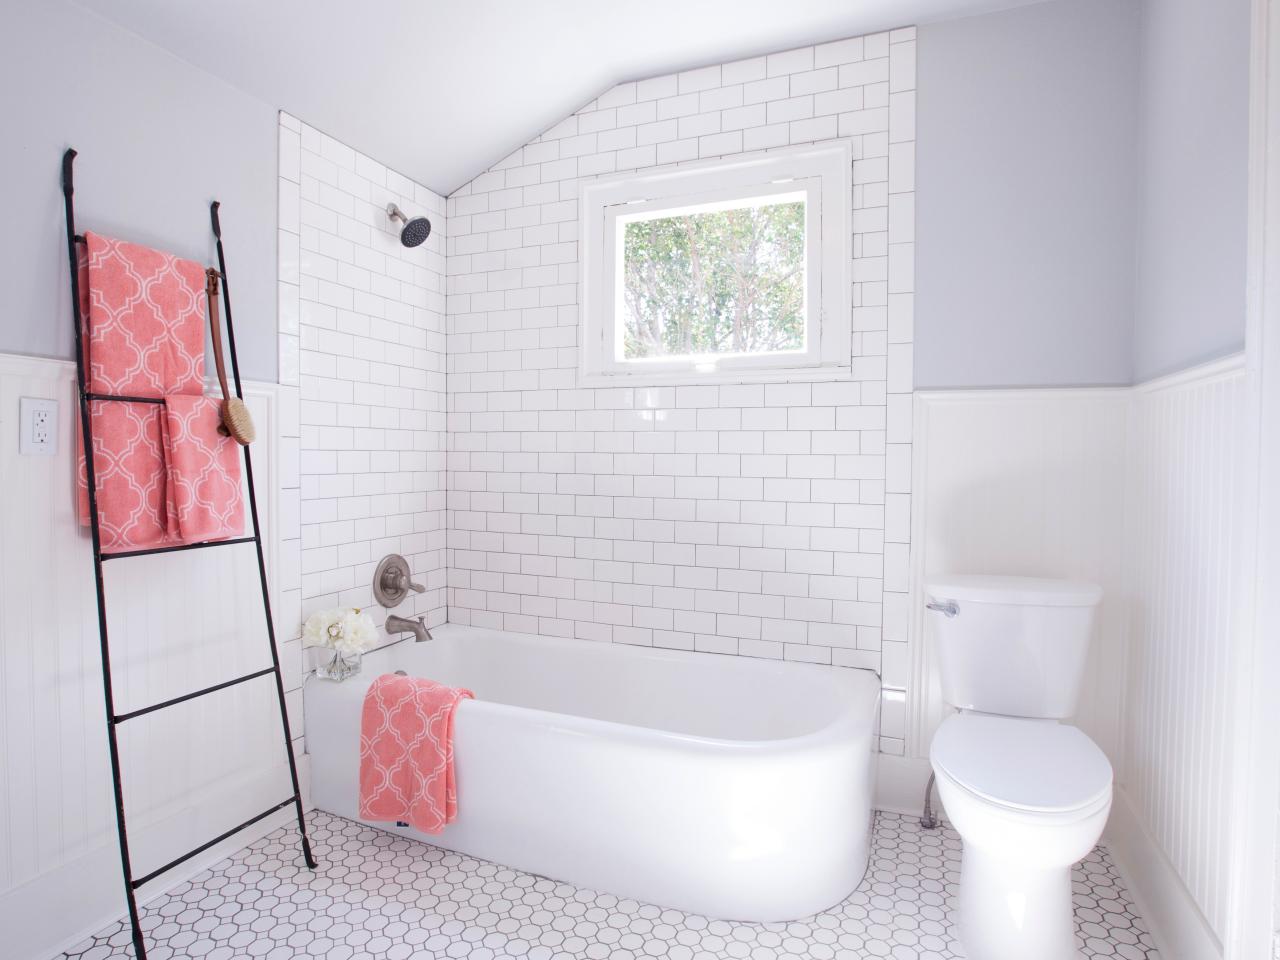 Ceramic Tile Flooring Tips Diy, Is Ceramic Or Porcelain Tile Better For Bathroom Walls